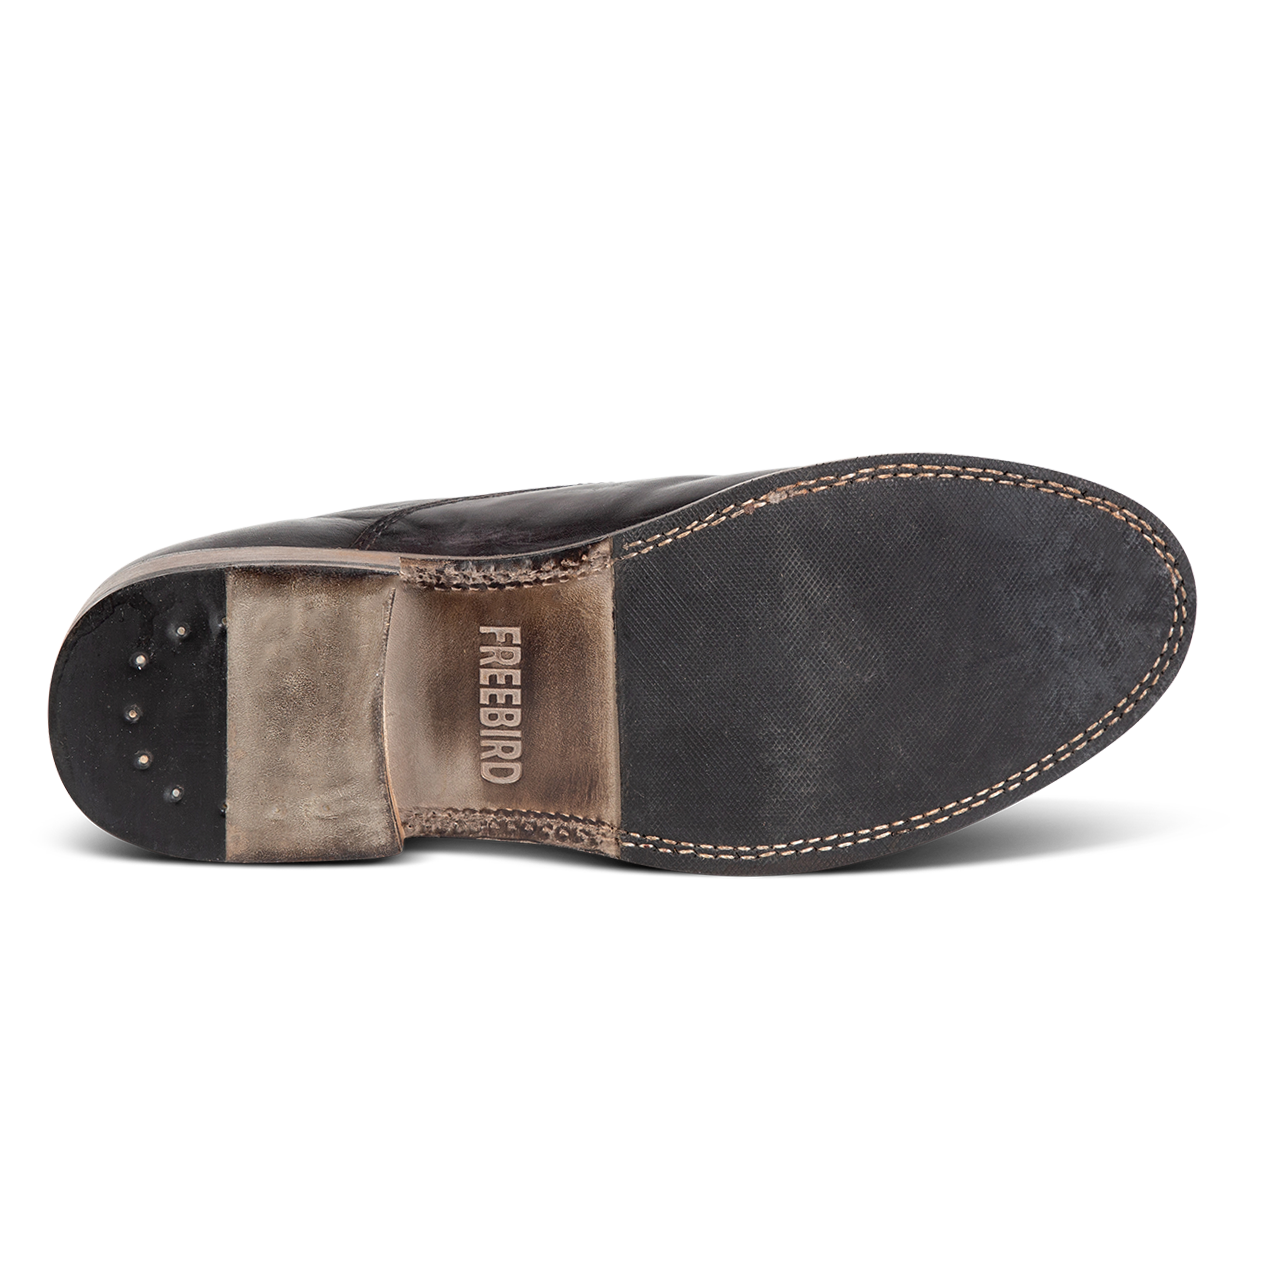 Rubber sole imprinted with FREEBIRD on men's Detrick black shoe